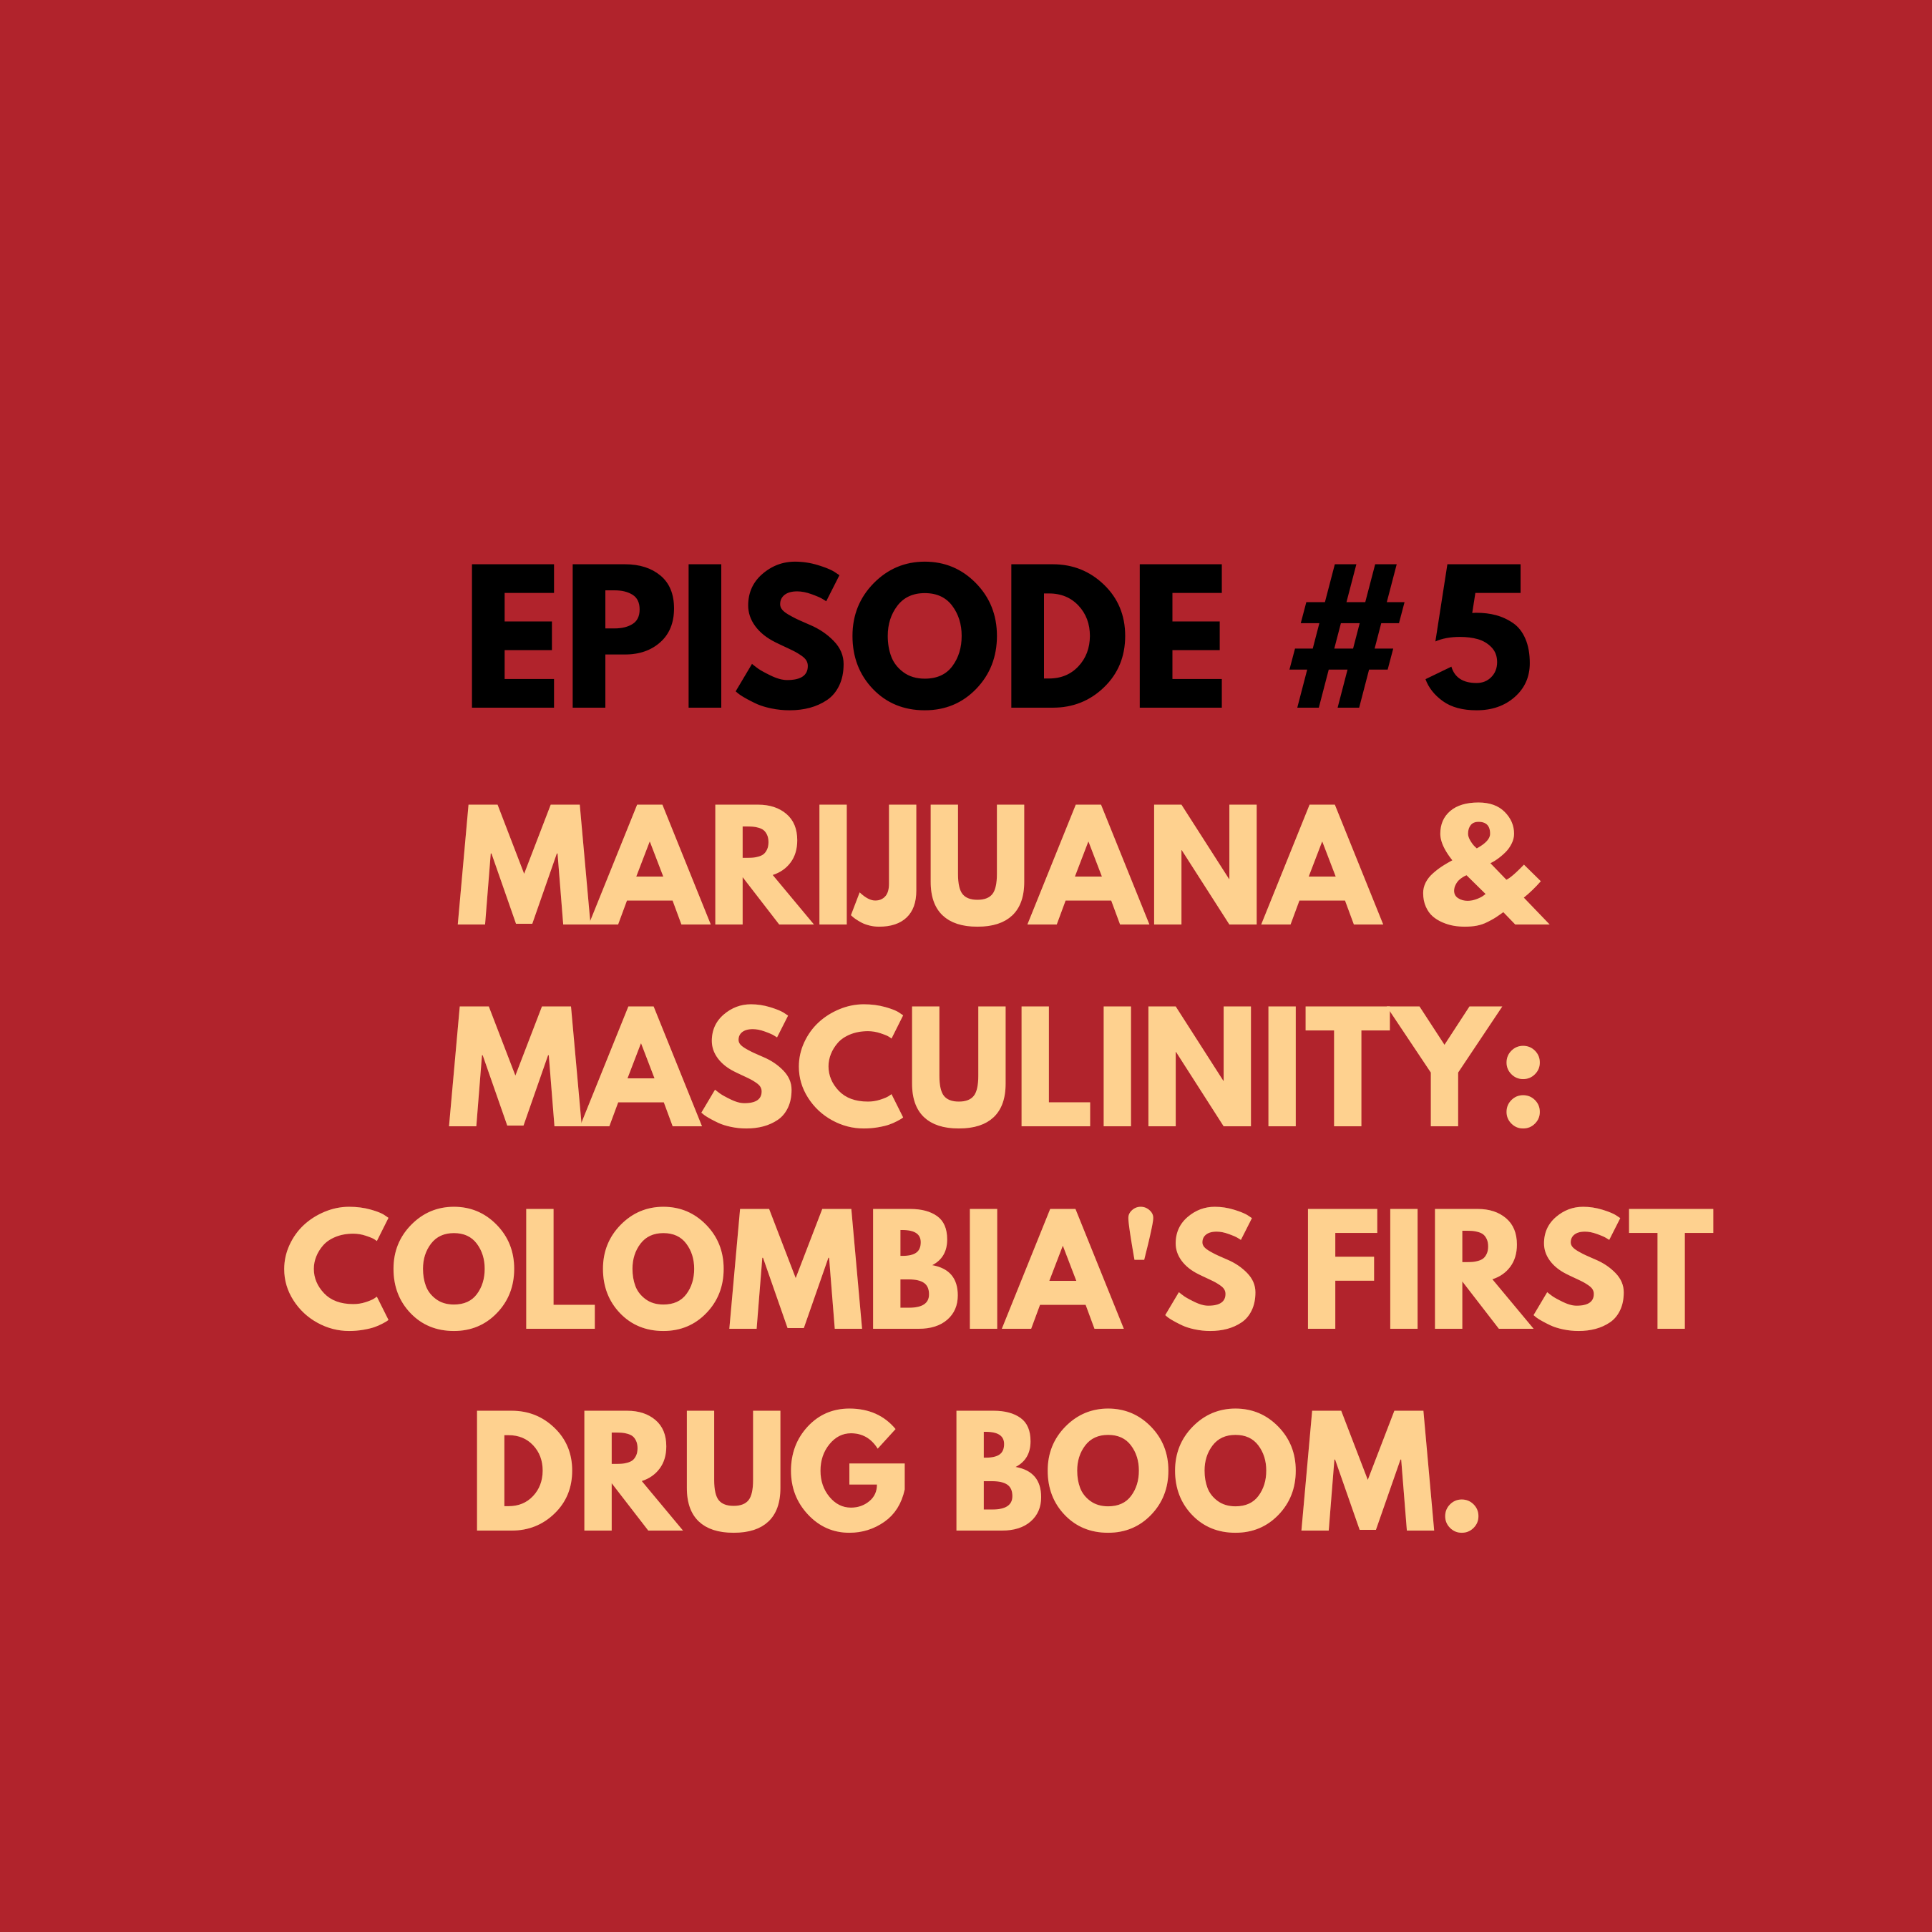 EPISODE #5 Marijuana & Masculinity: Colombia's First Drug Boom.